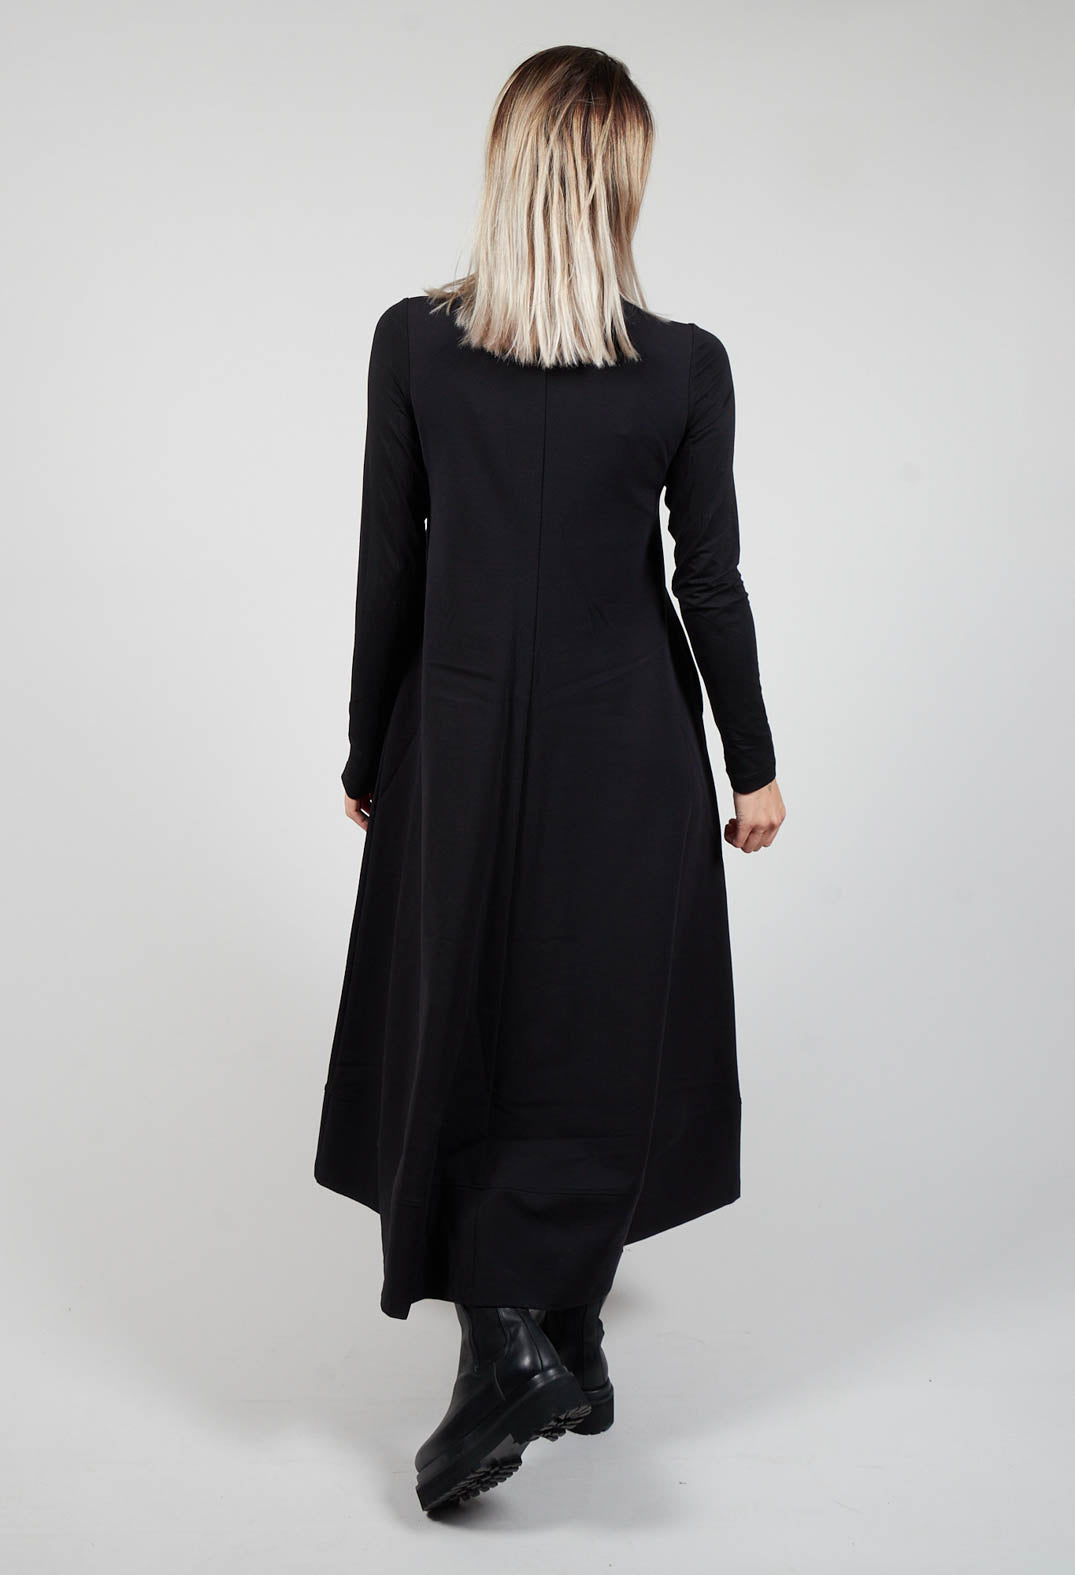 Dife A-Line Dress in Black